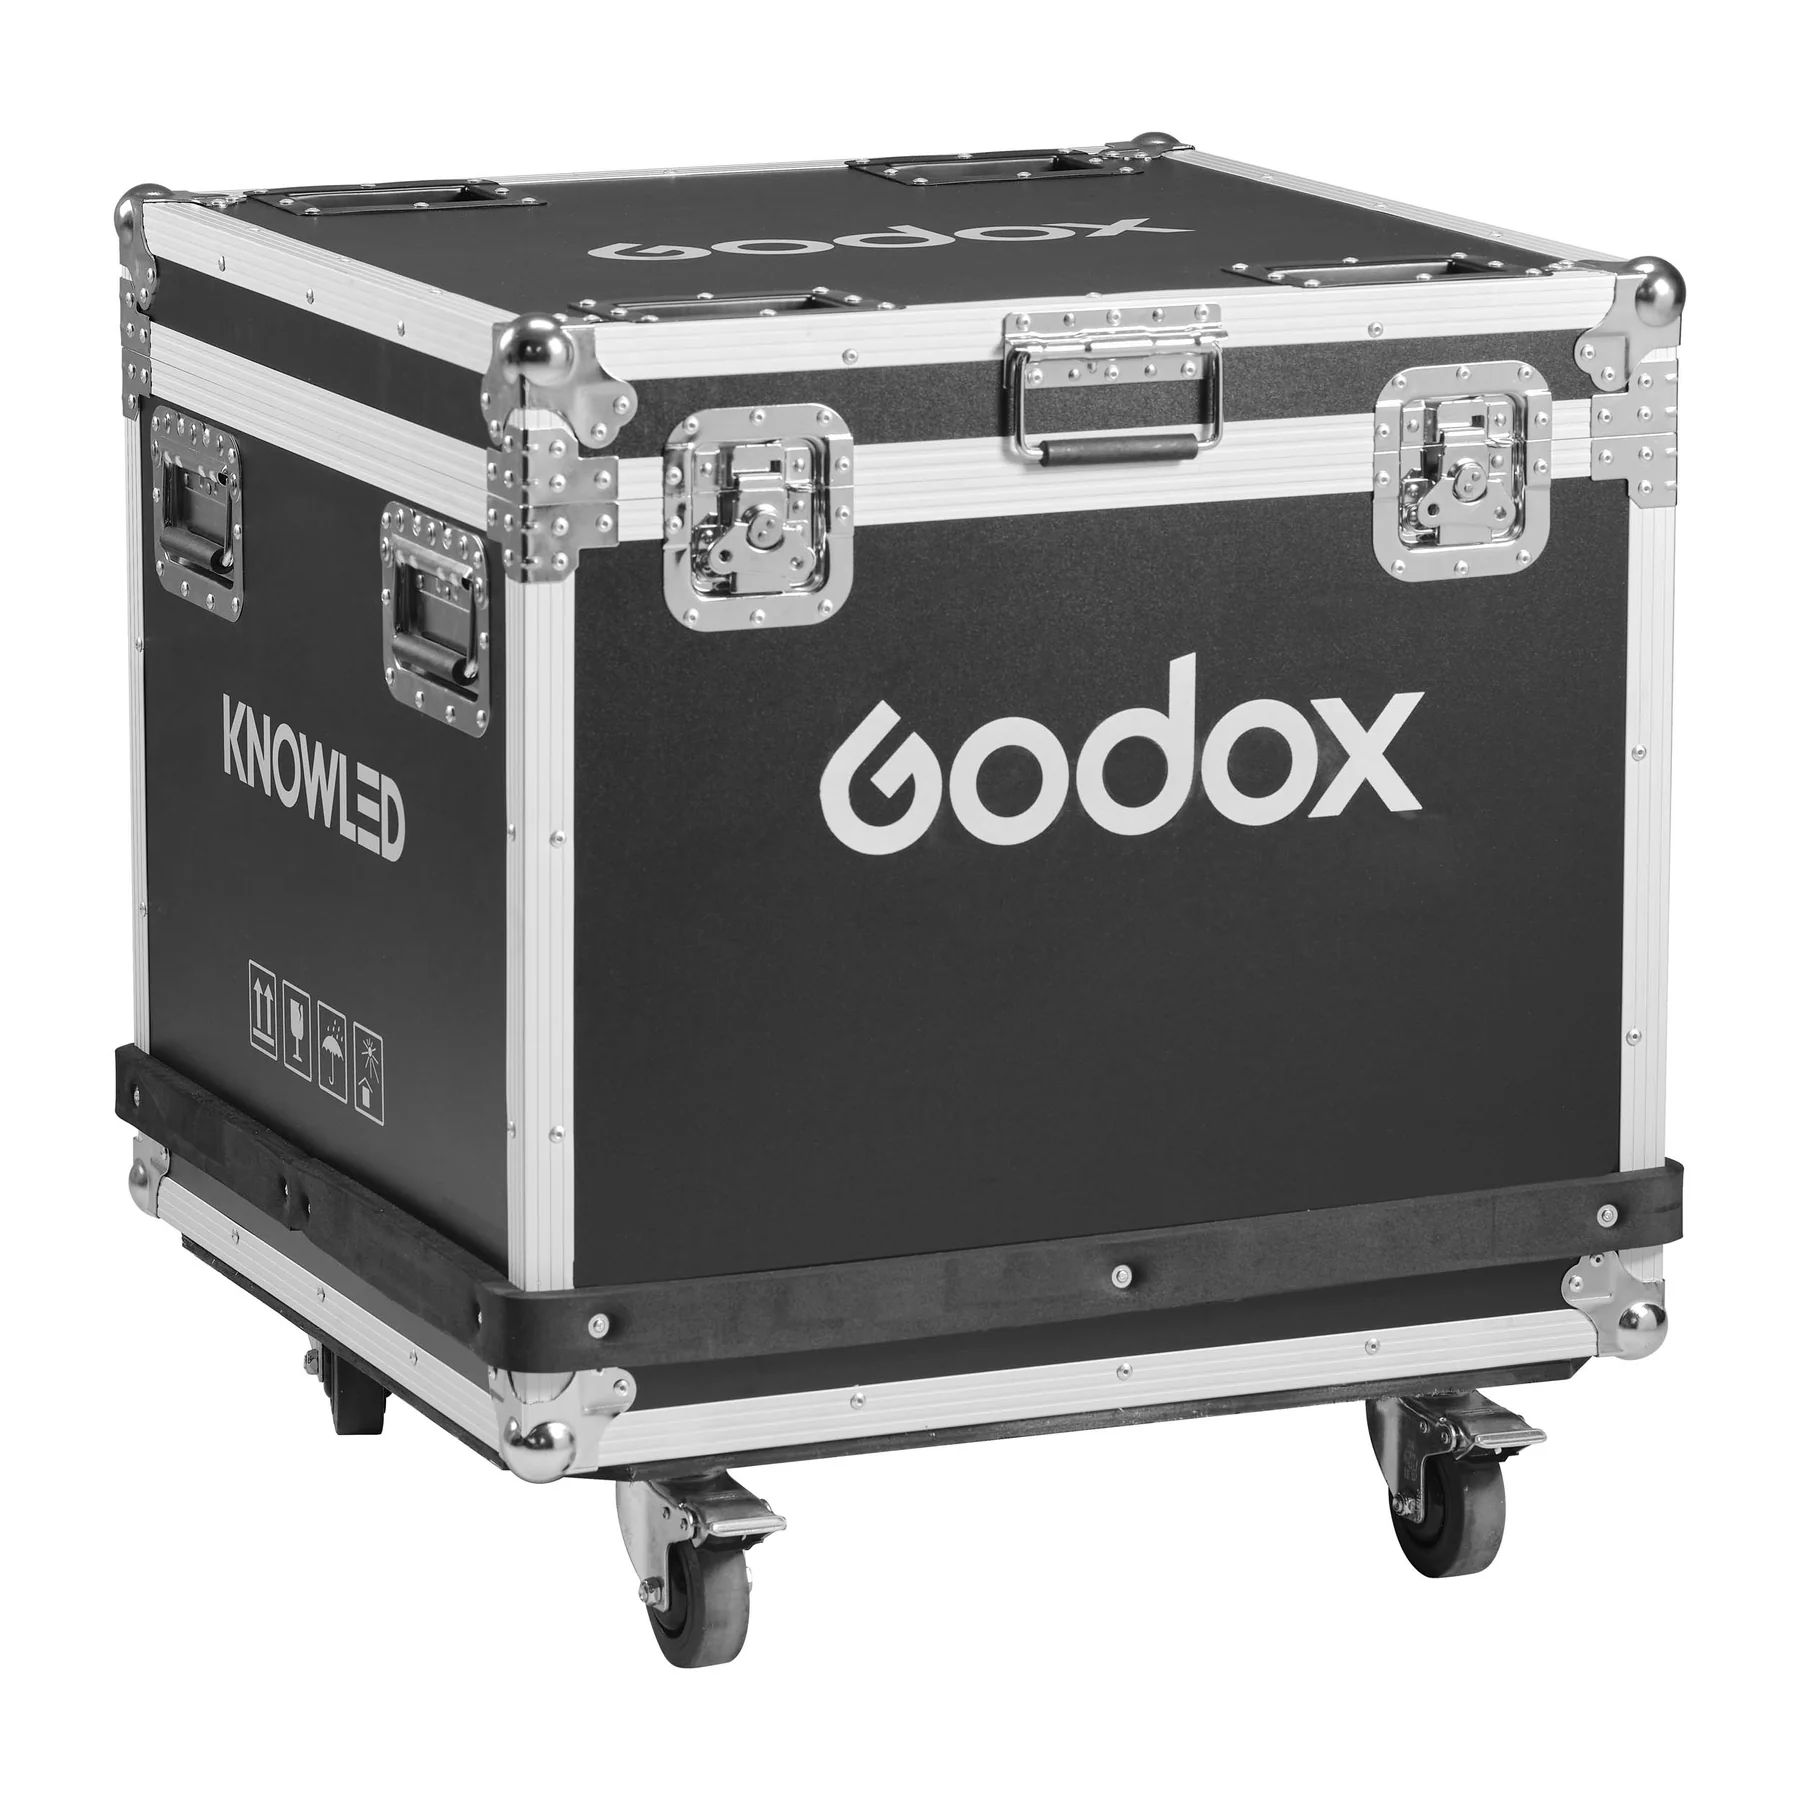    Godox Knowled MG2400Bi   Ultra-mart